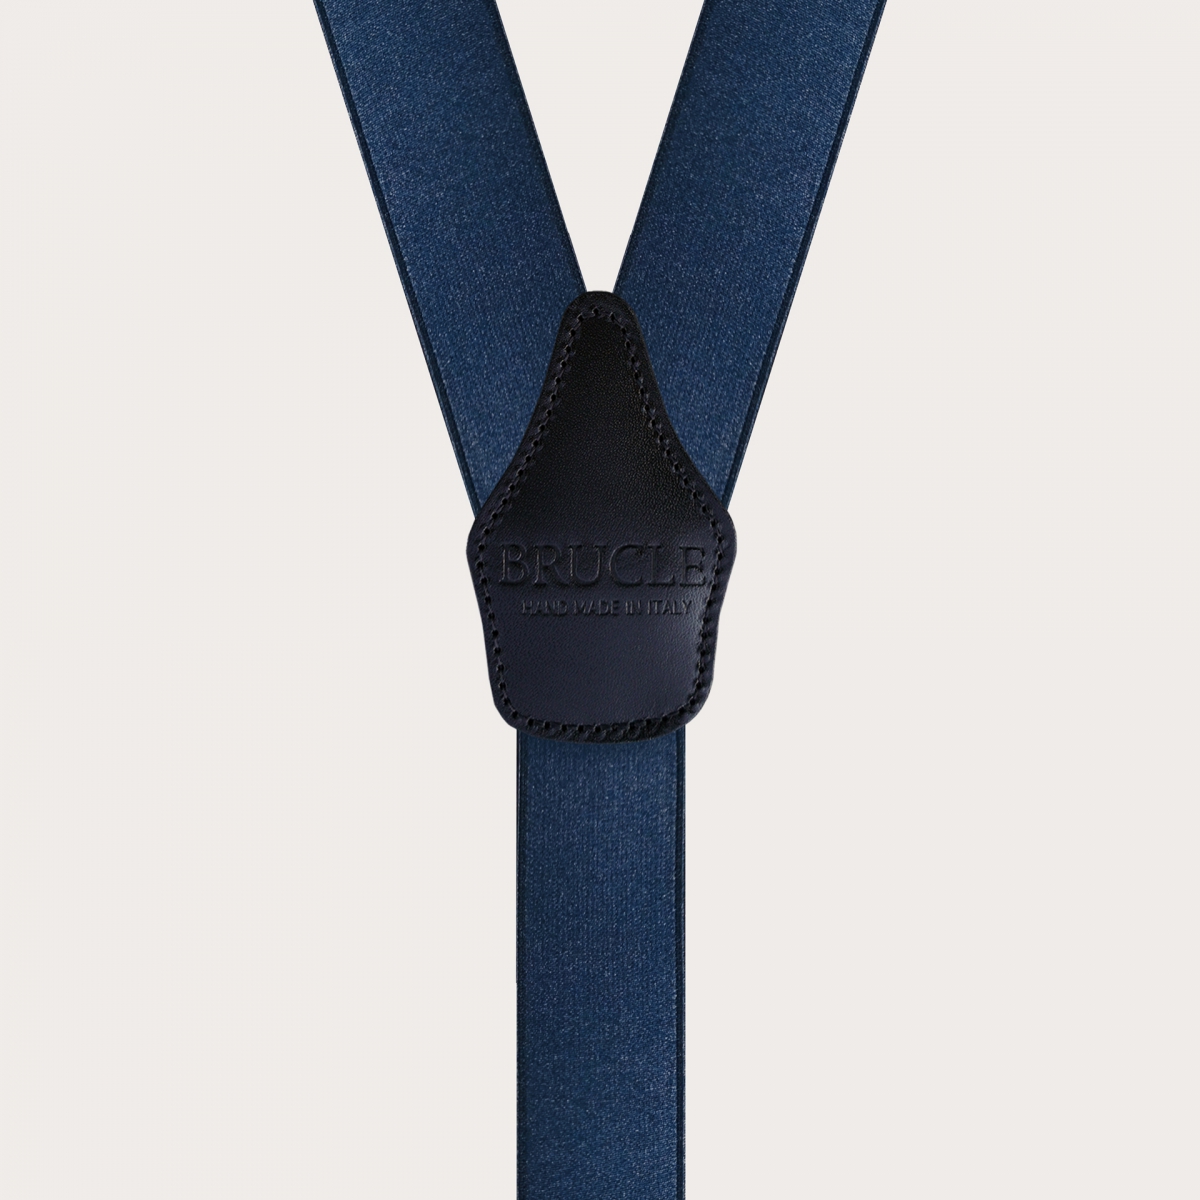 Bretelle eleganti in raso elastico blu 